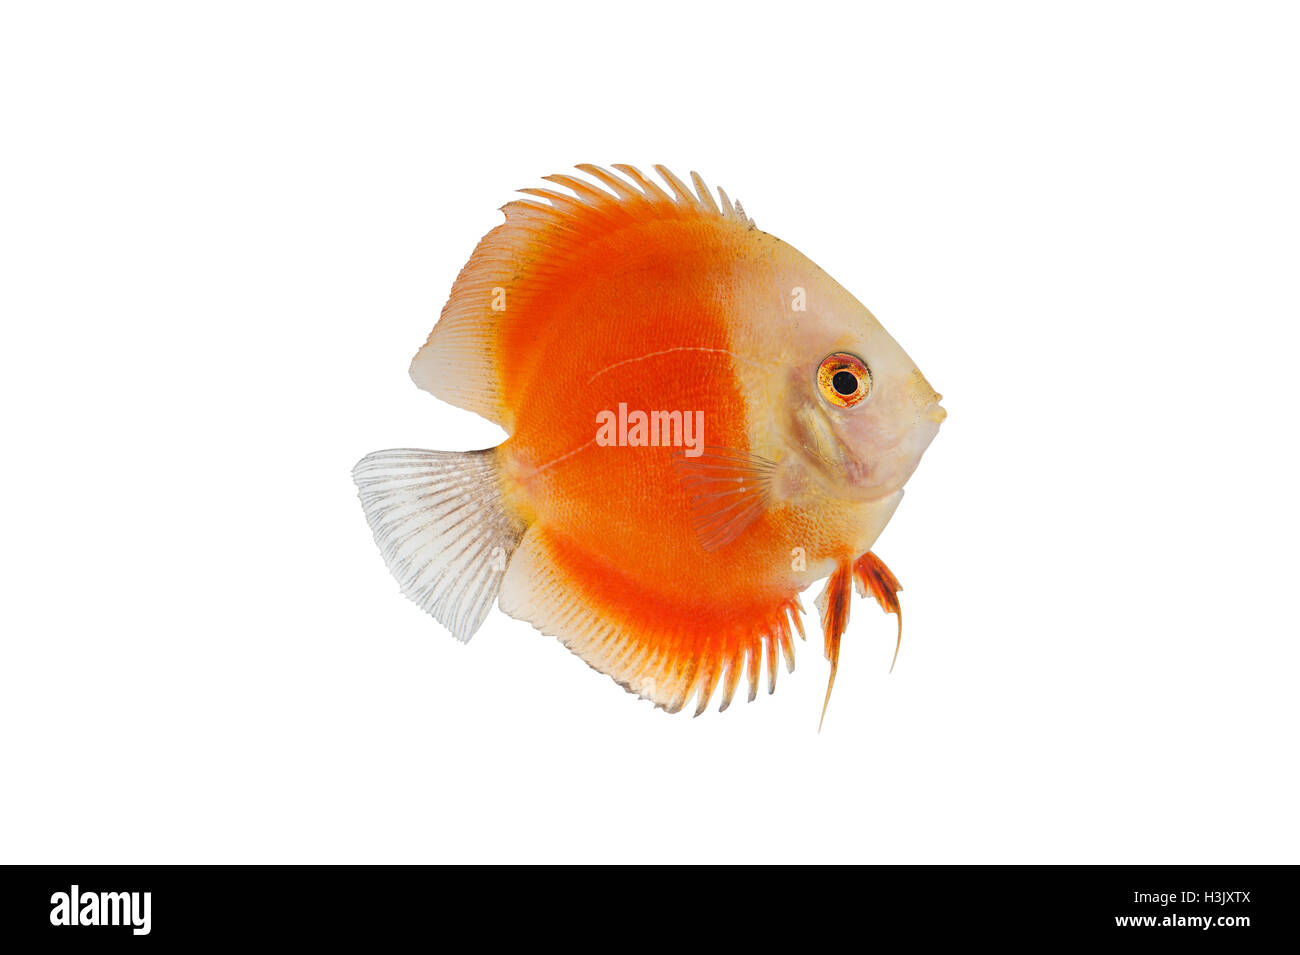 Orange Pompadour Discus Fish Isolated on white Background Stock Photo